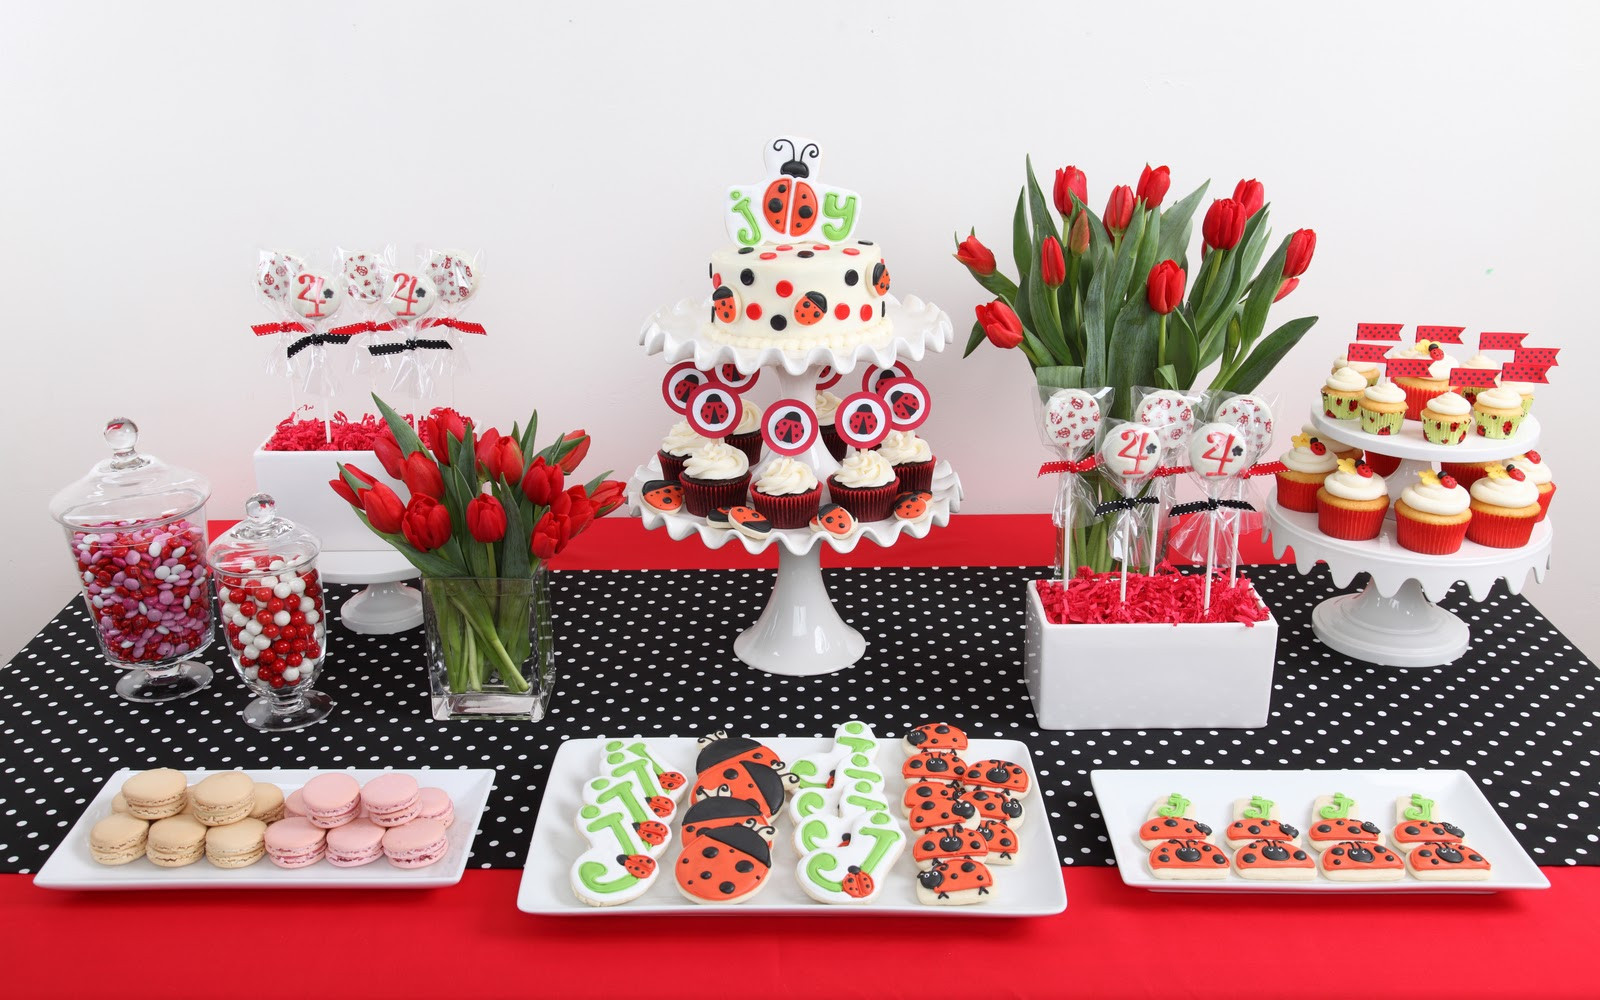 Best ideas about Ladybug Birthday Decorations
. Save or Pin Joy’s Ladybug Birthday – Glorious Treats Now.